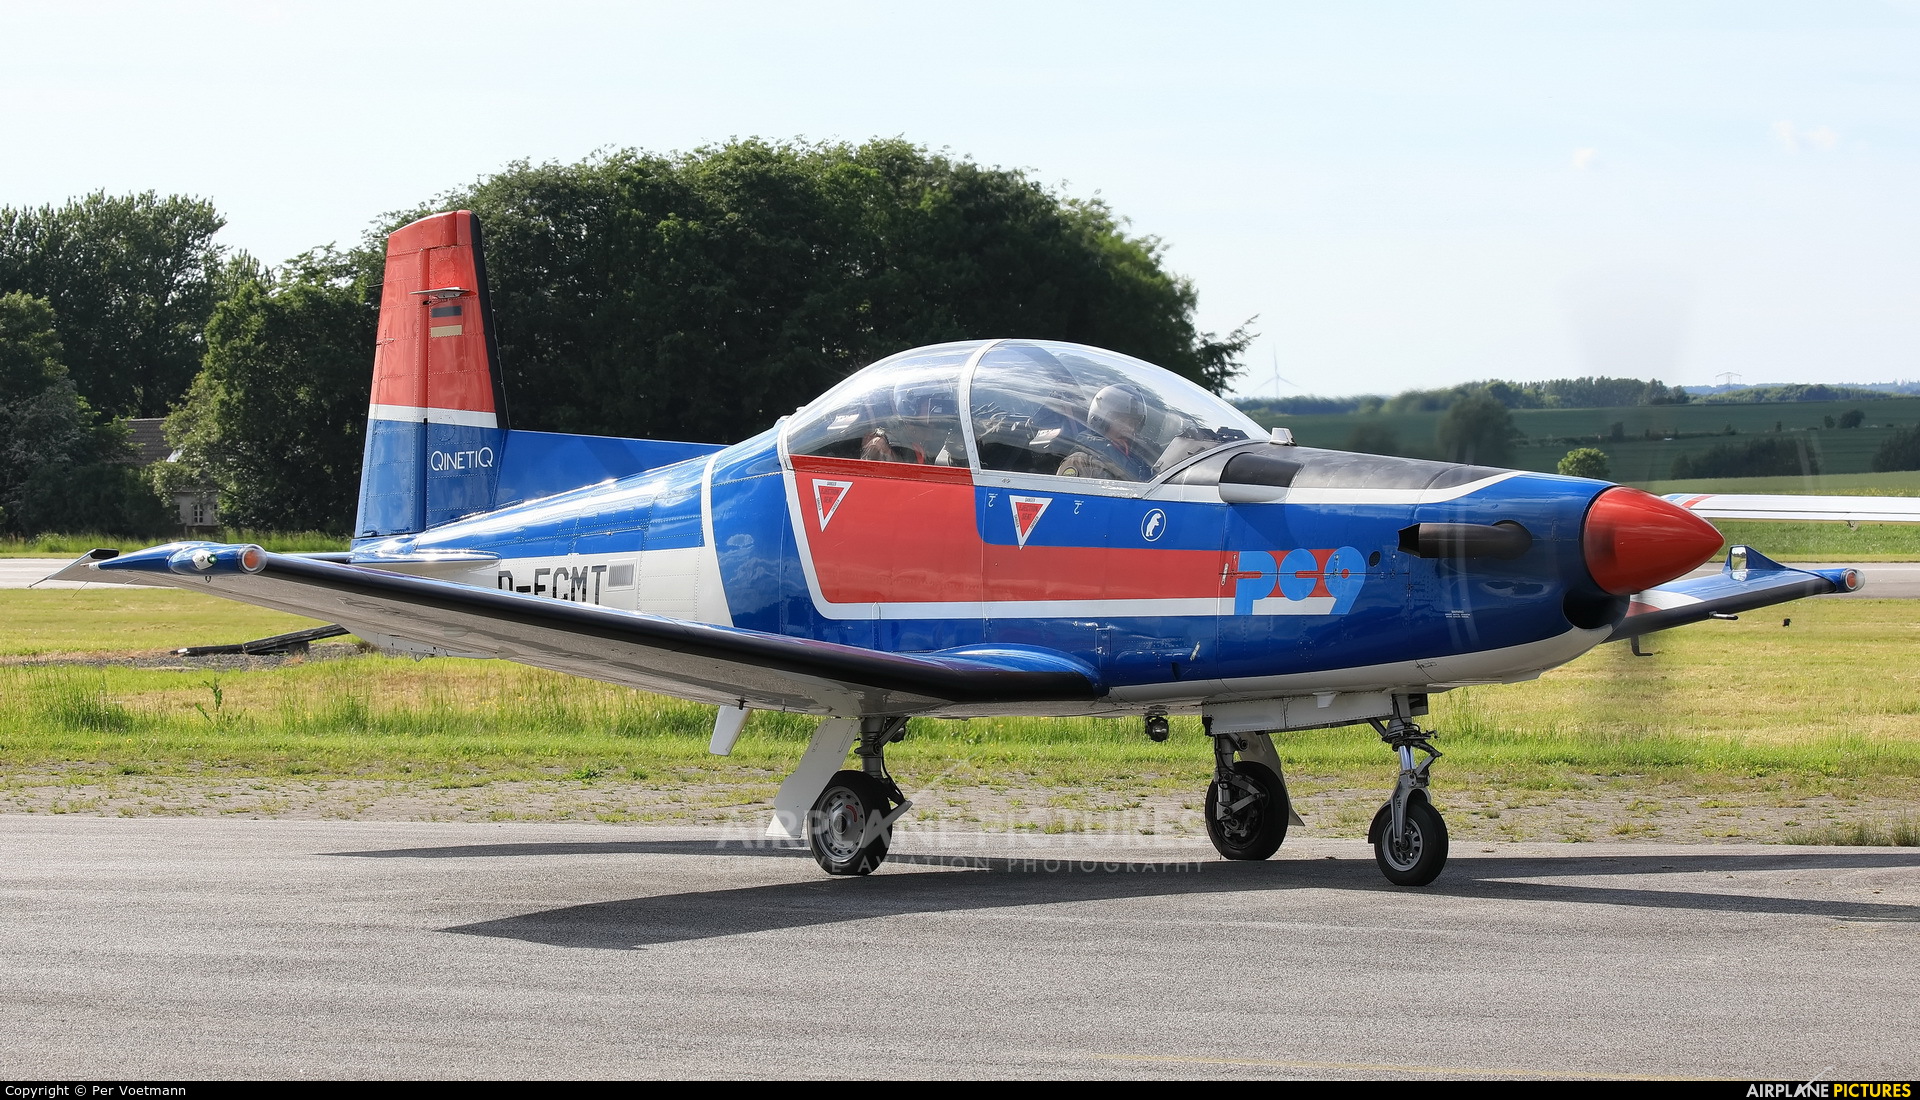 QinetiQ D-FCMT aircraft at Randers Flyveplads